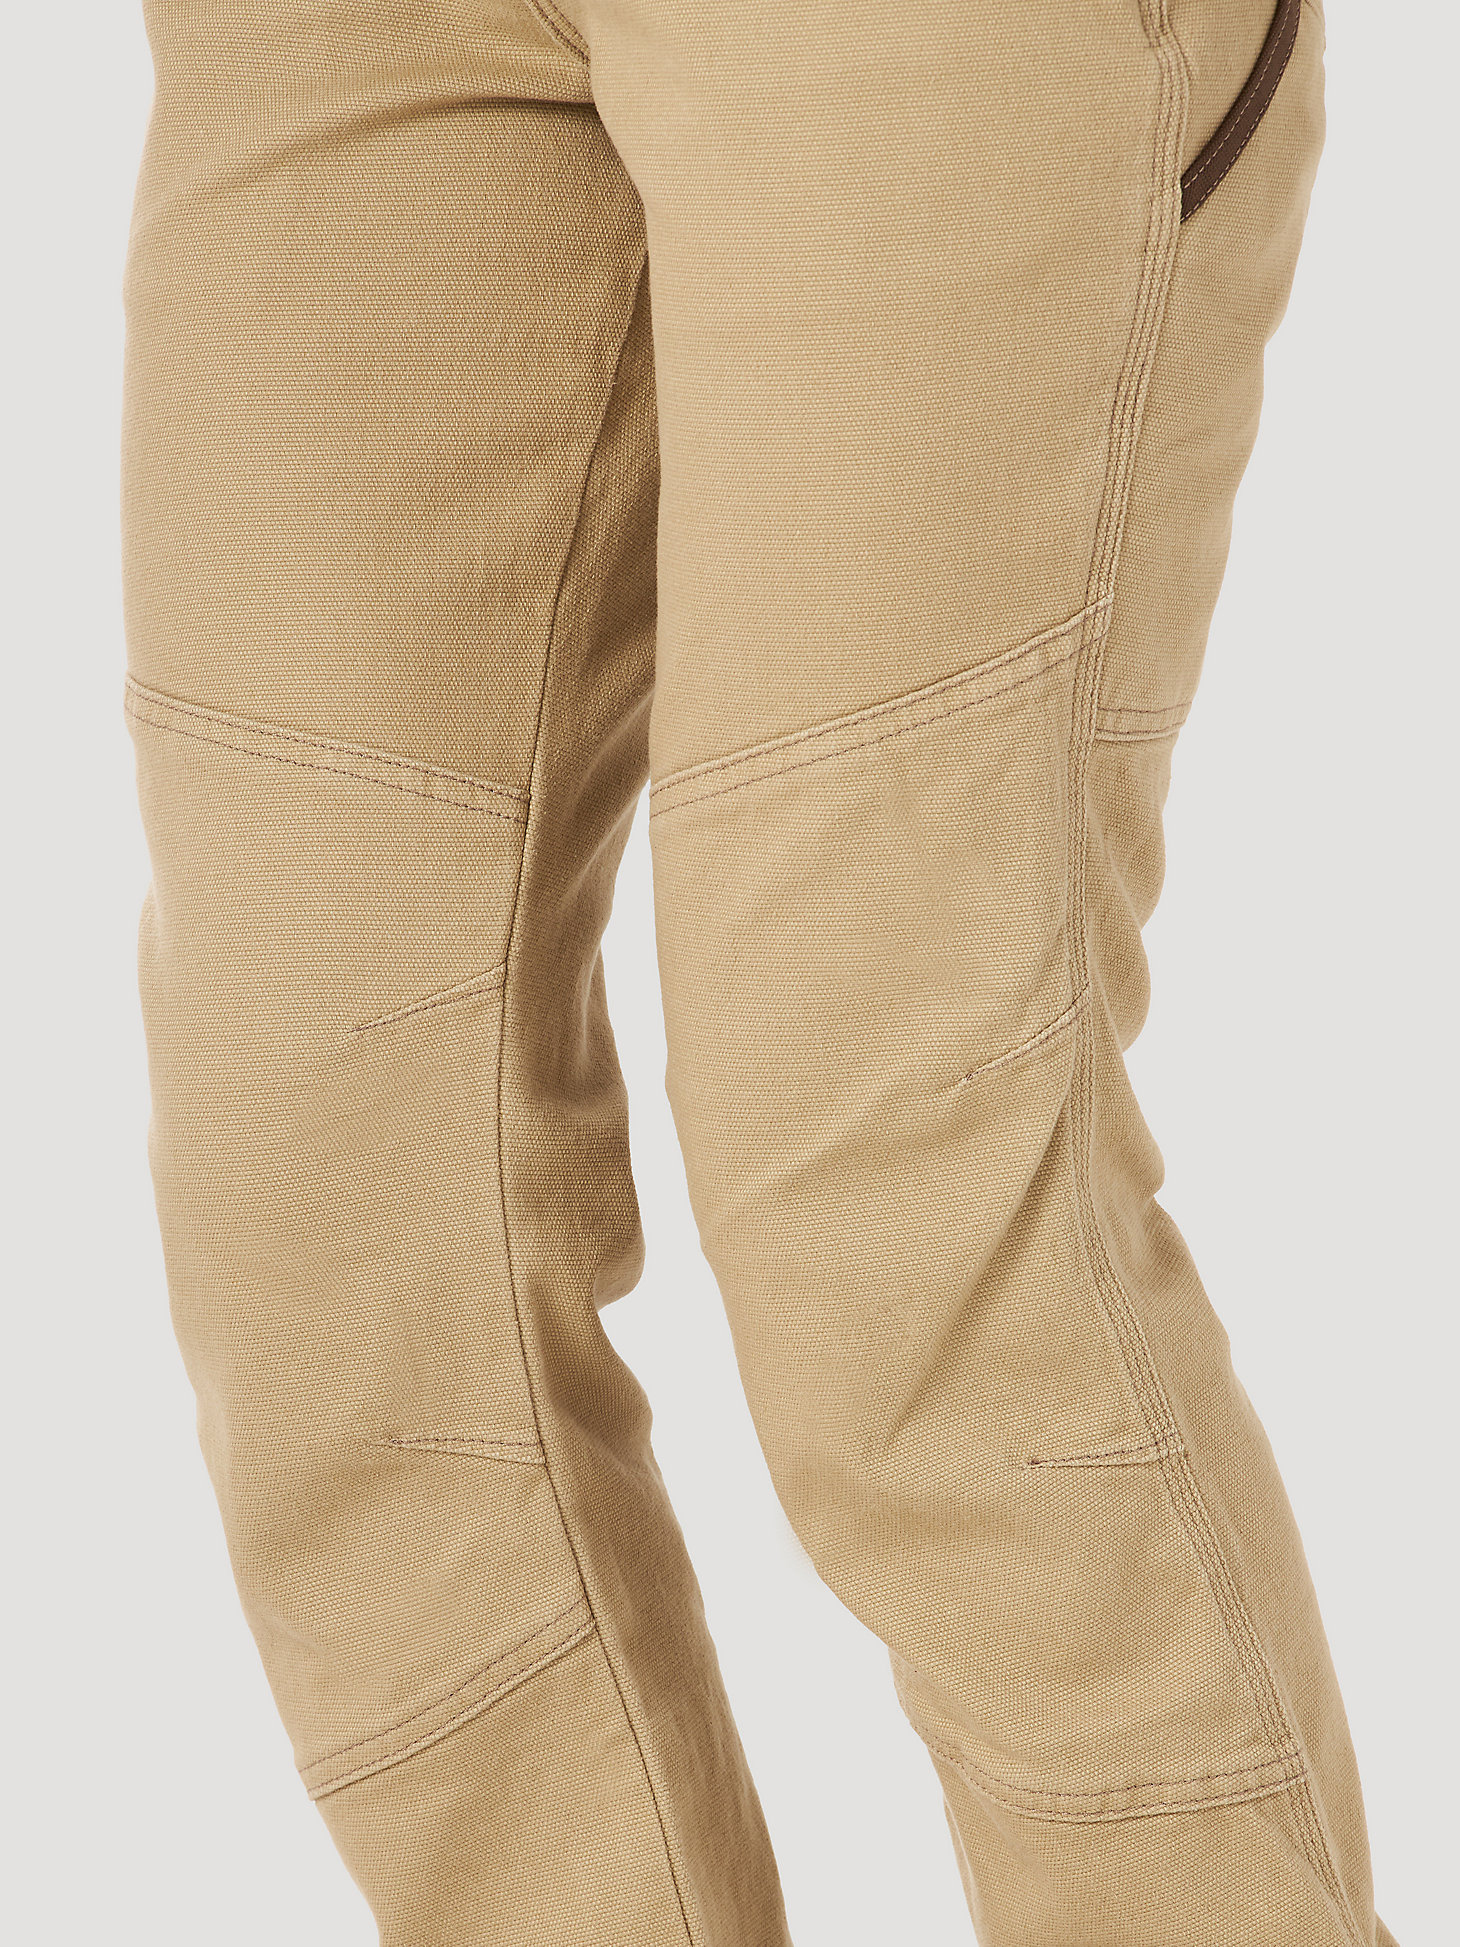 Women's Wrangler® RIGGS Workwear® Straight Fit Utility Work Pant in Golden Khaki alternative view 7